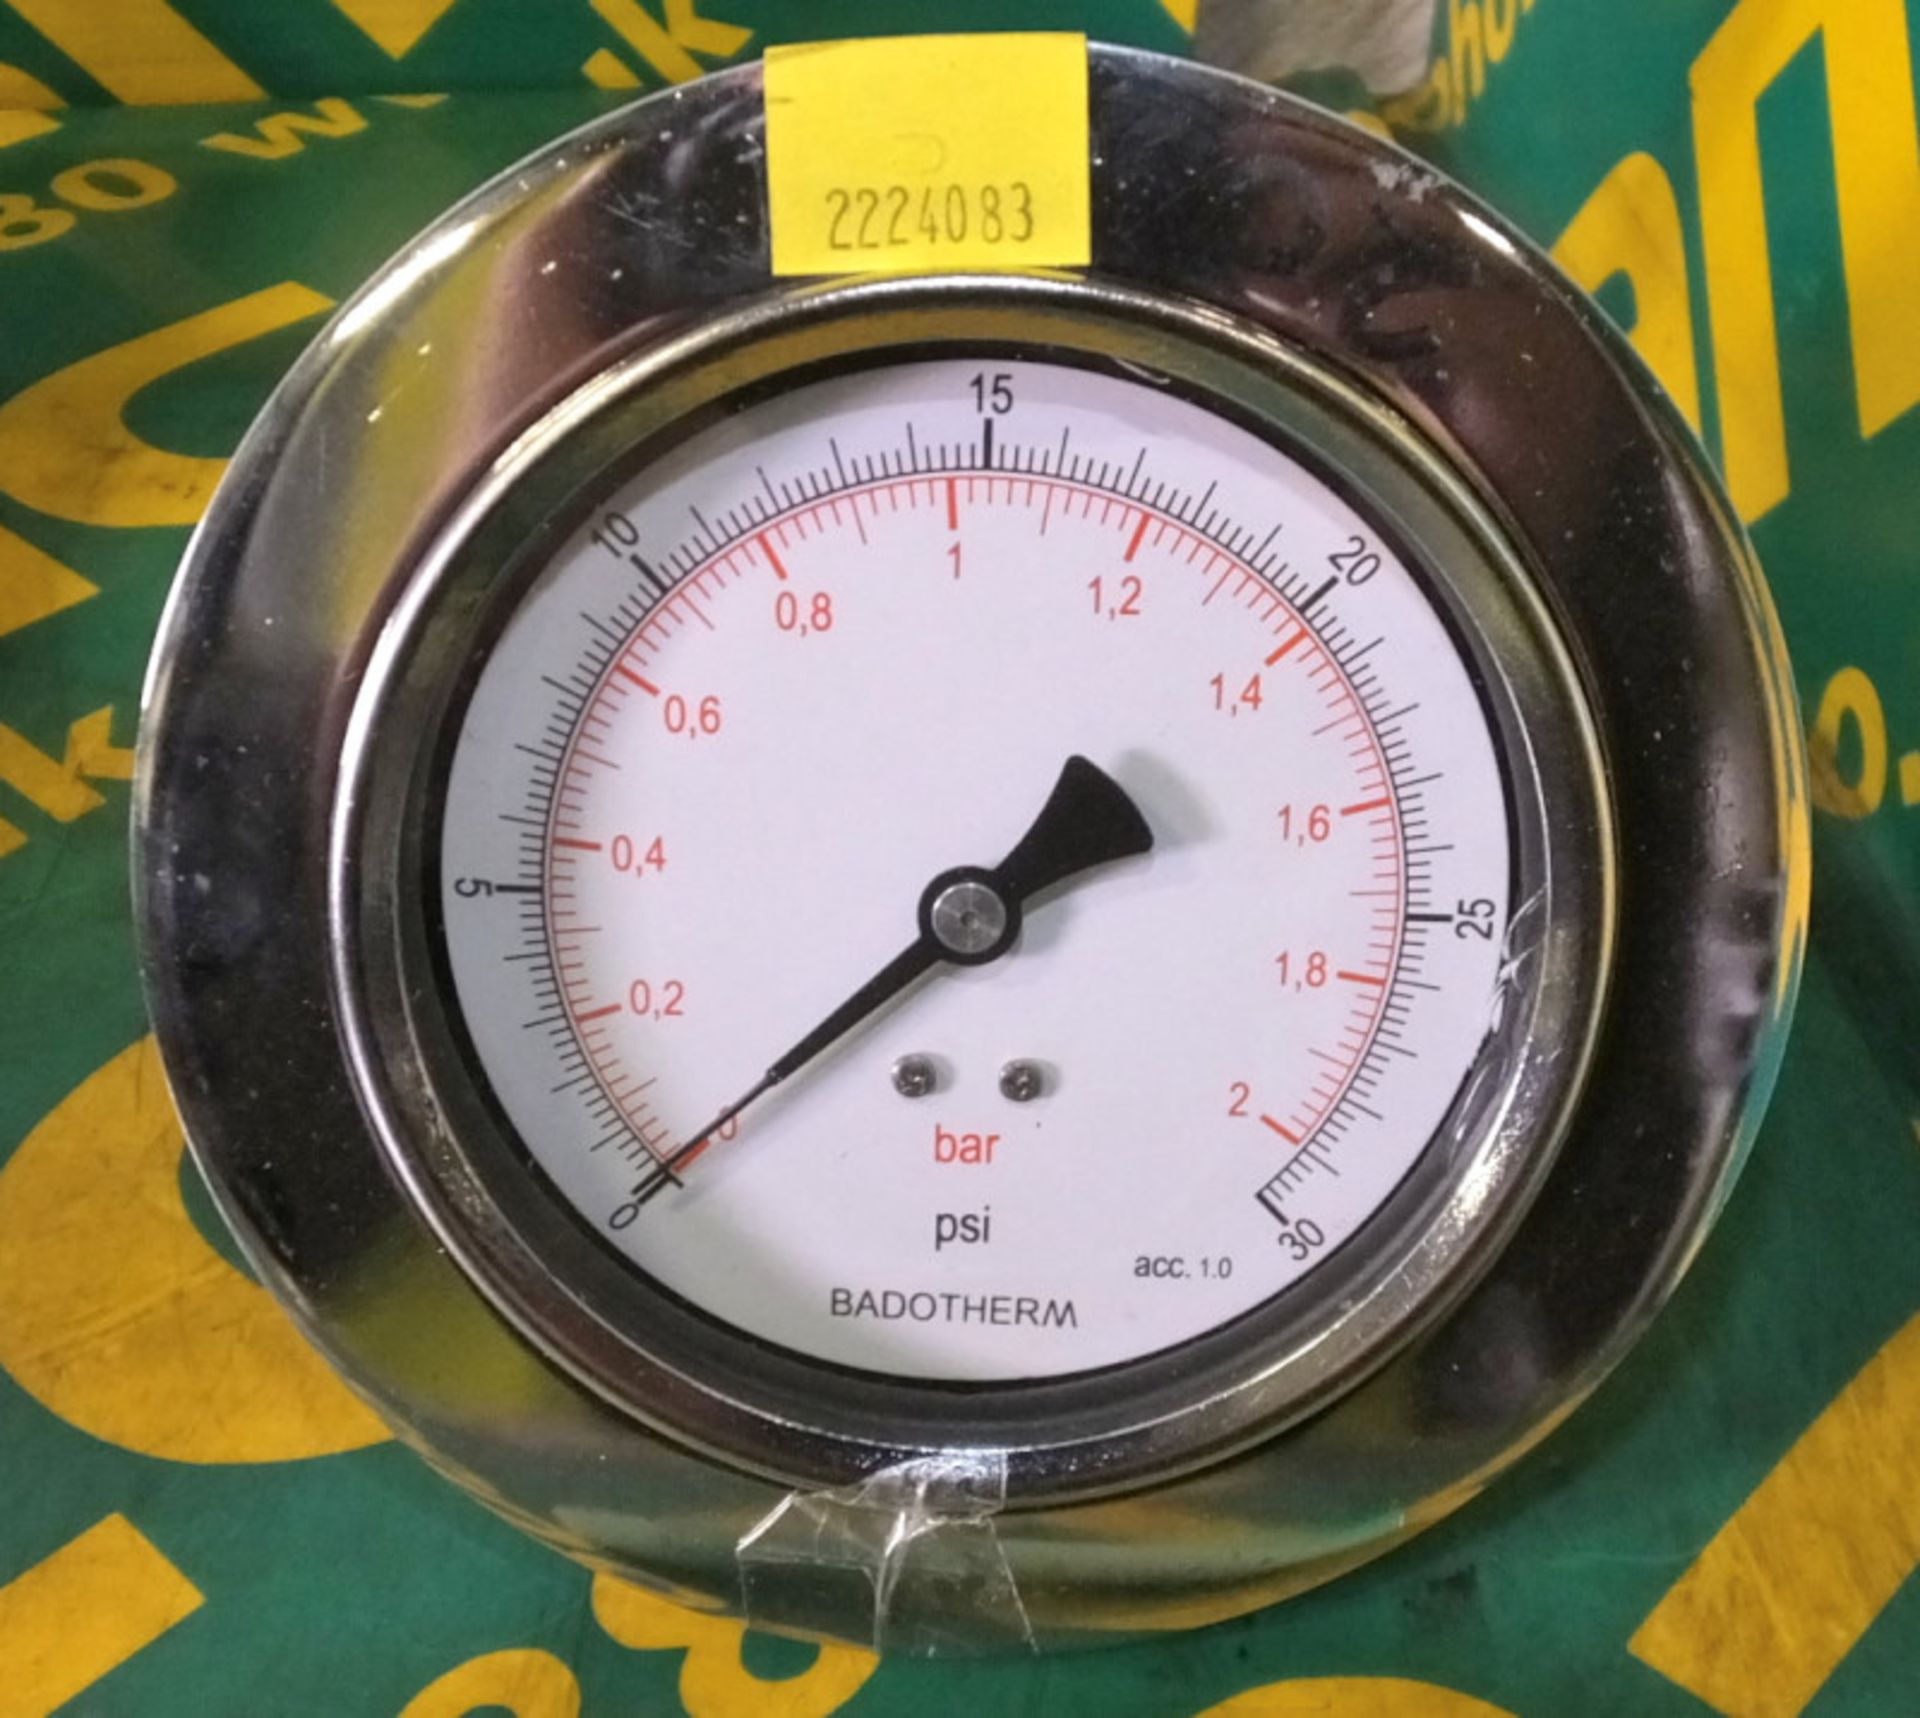 Badotherm Gauge Pressure Bar 0-2 PSI 0-30 - Image 2 of 3